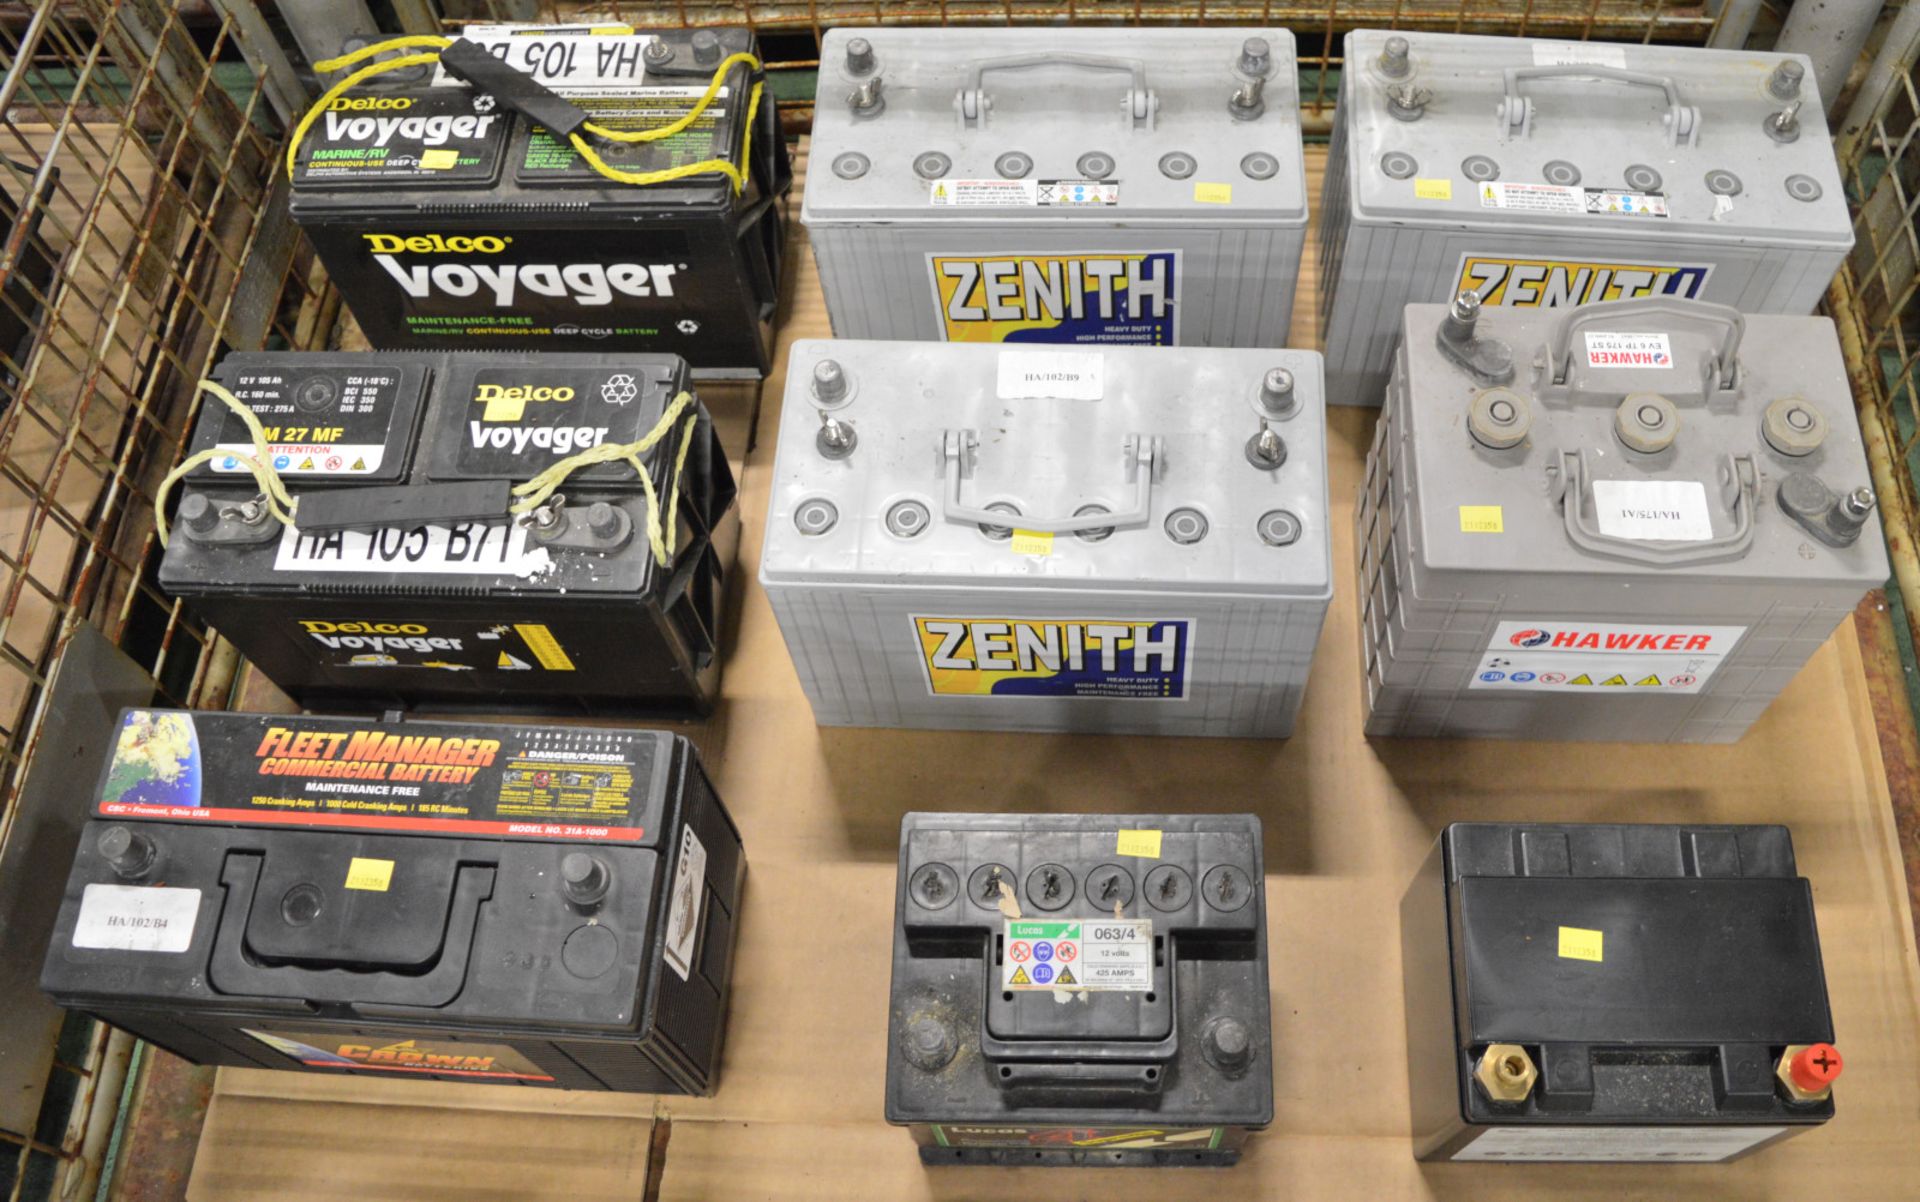 Batteries - 3x Zenith HA/102/B9, 2x Delco Voyager HA 105 B71, Crown 31A-1000, Lucas 4 063/ - Image 2 of 2